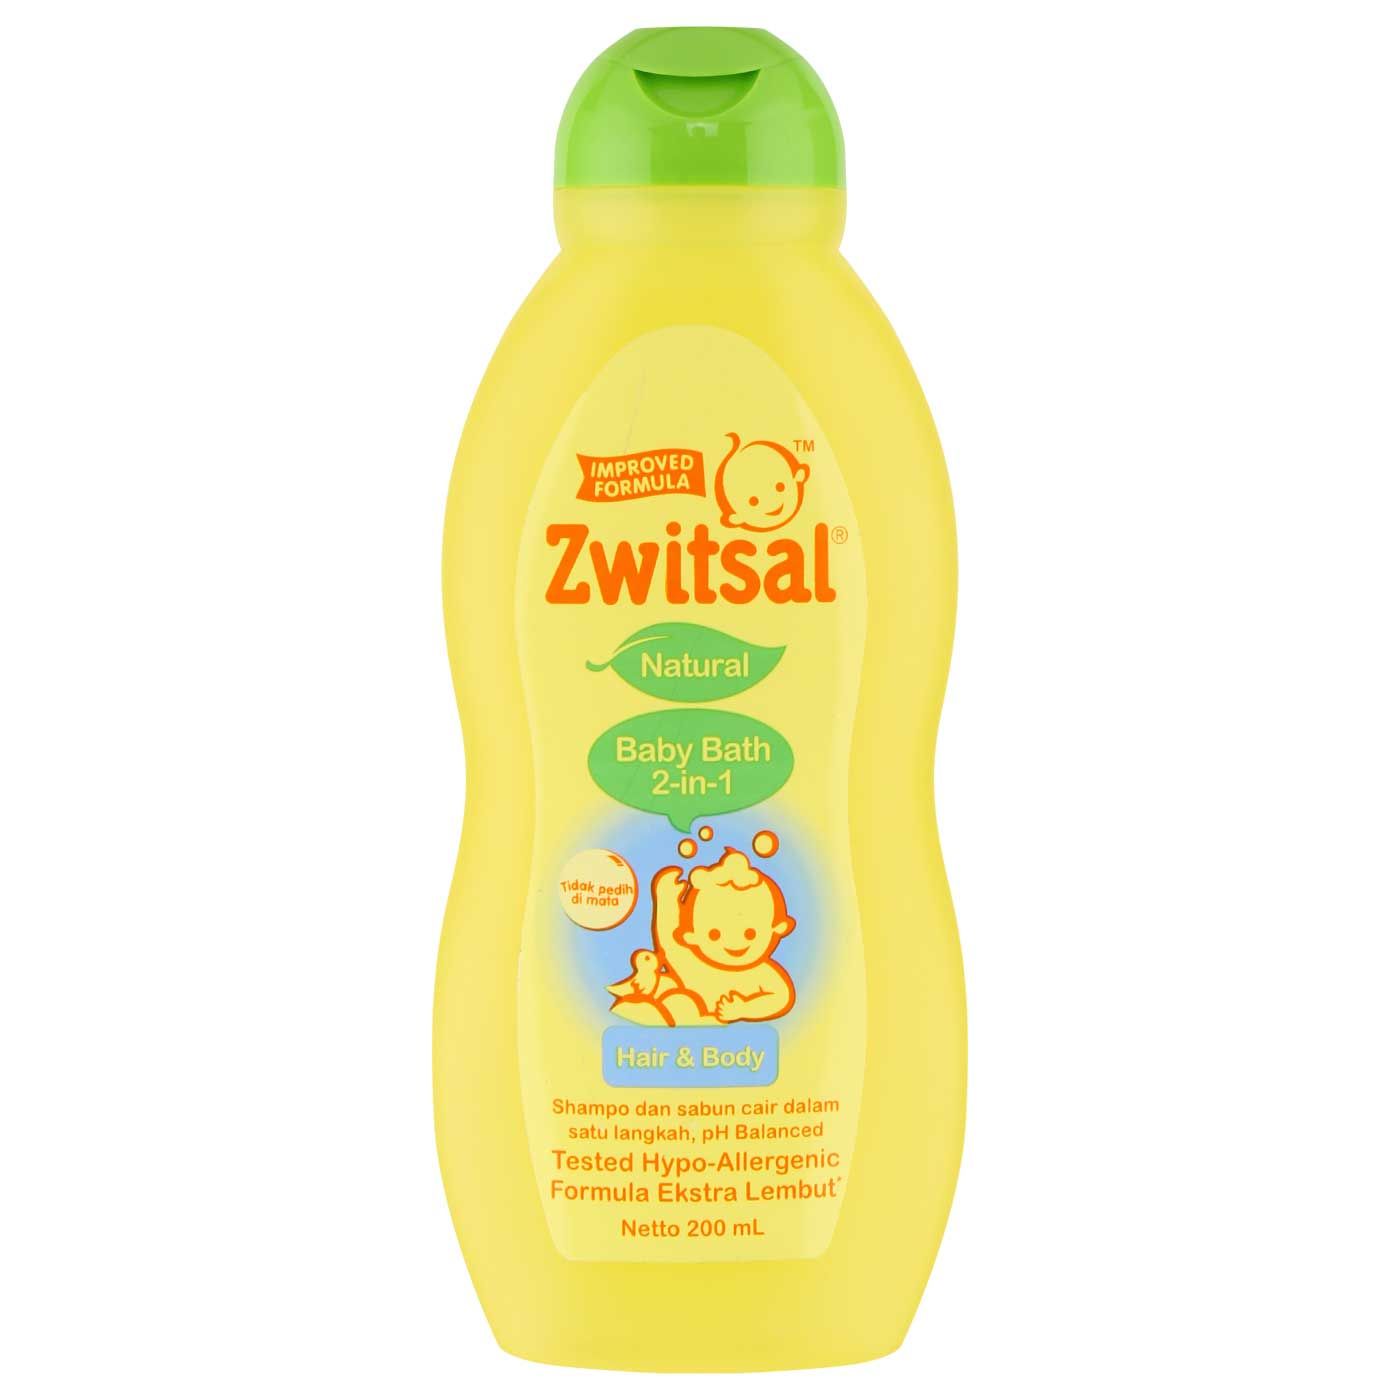 Zwitsal Natural Baby Bath 2in1 Hair & Body 200ml Tub - 1